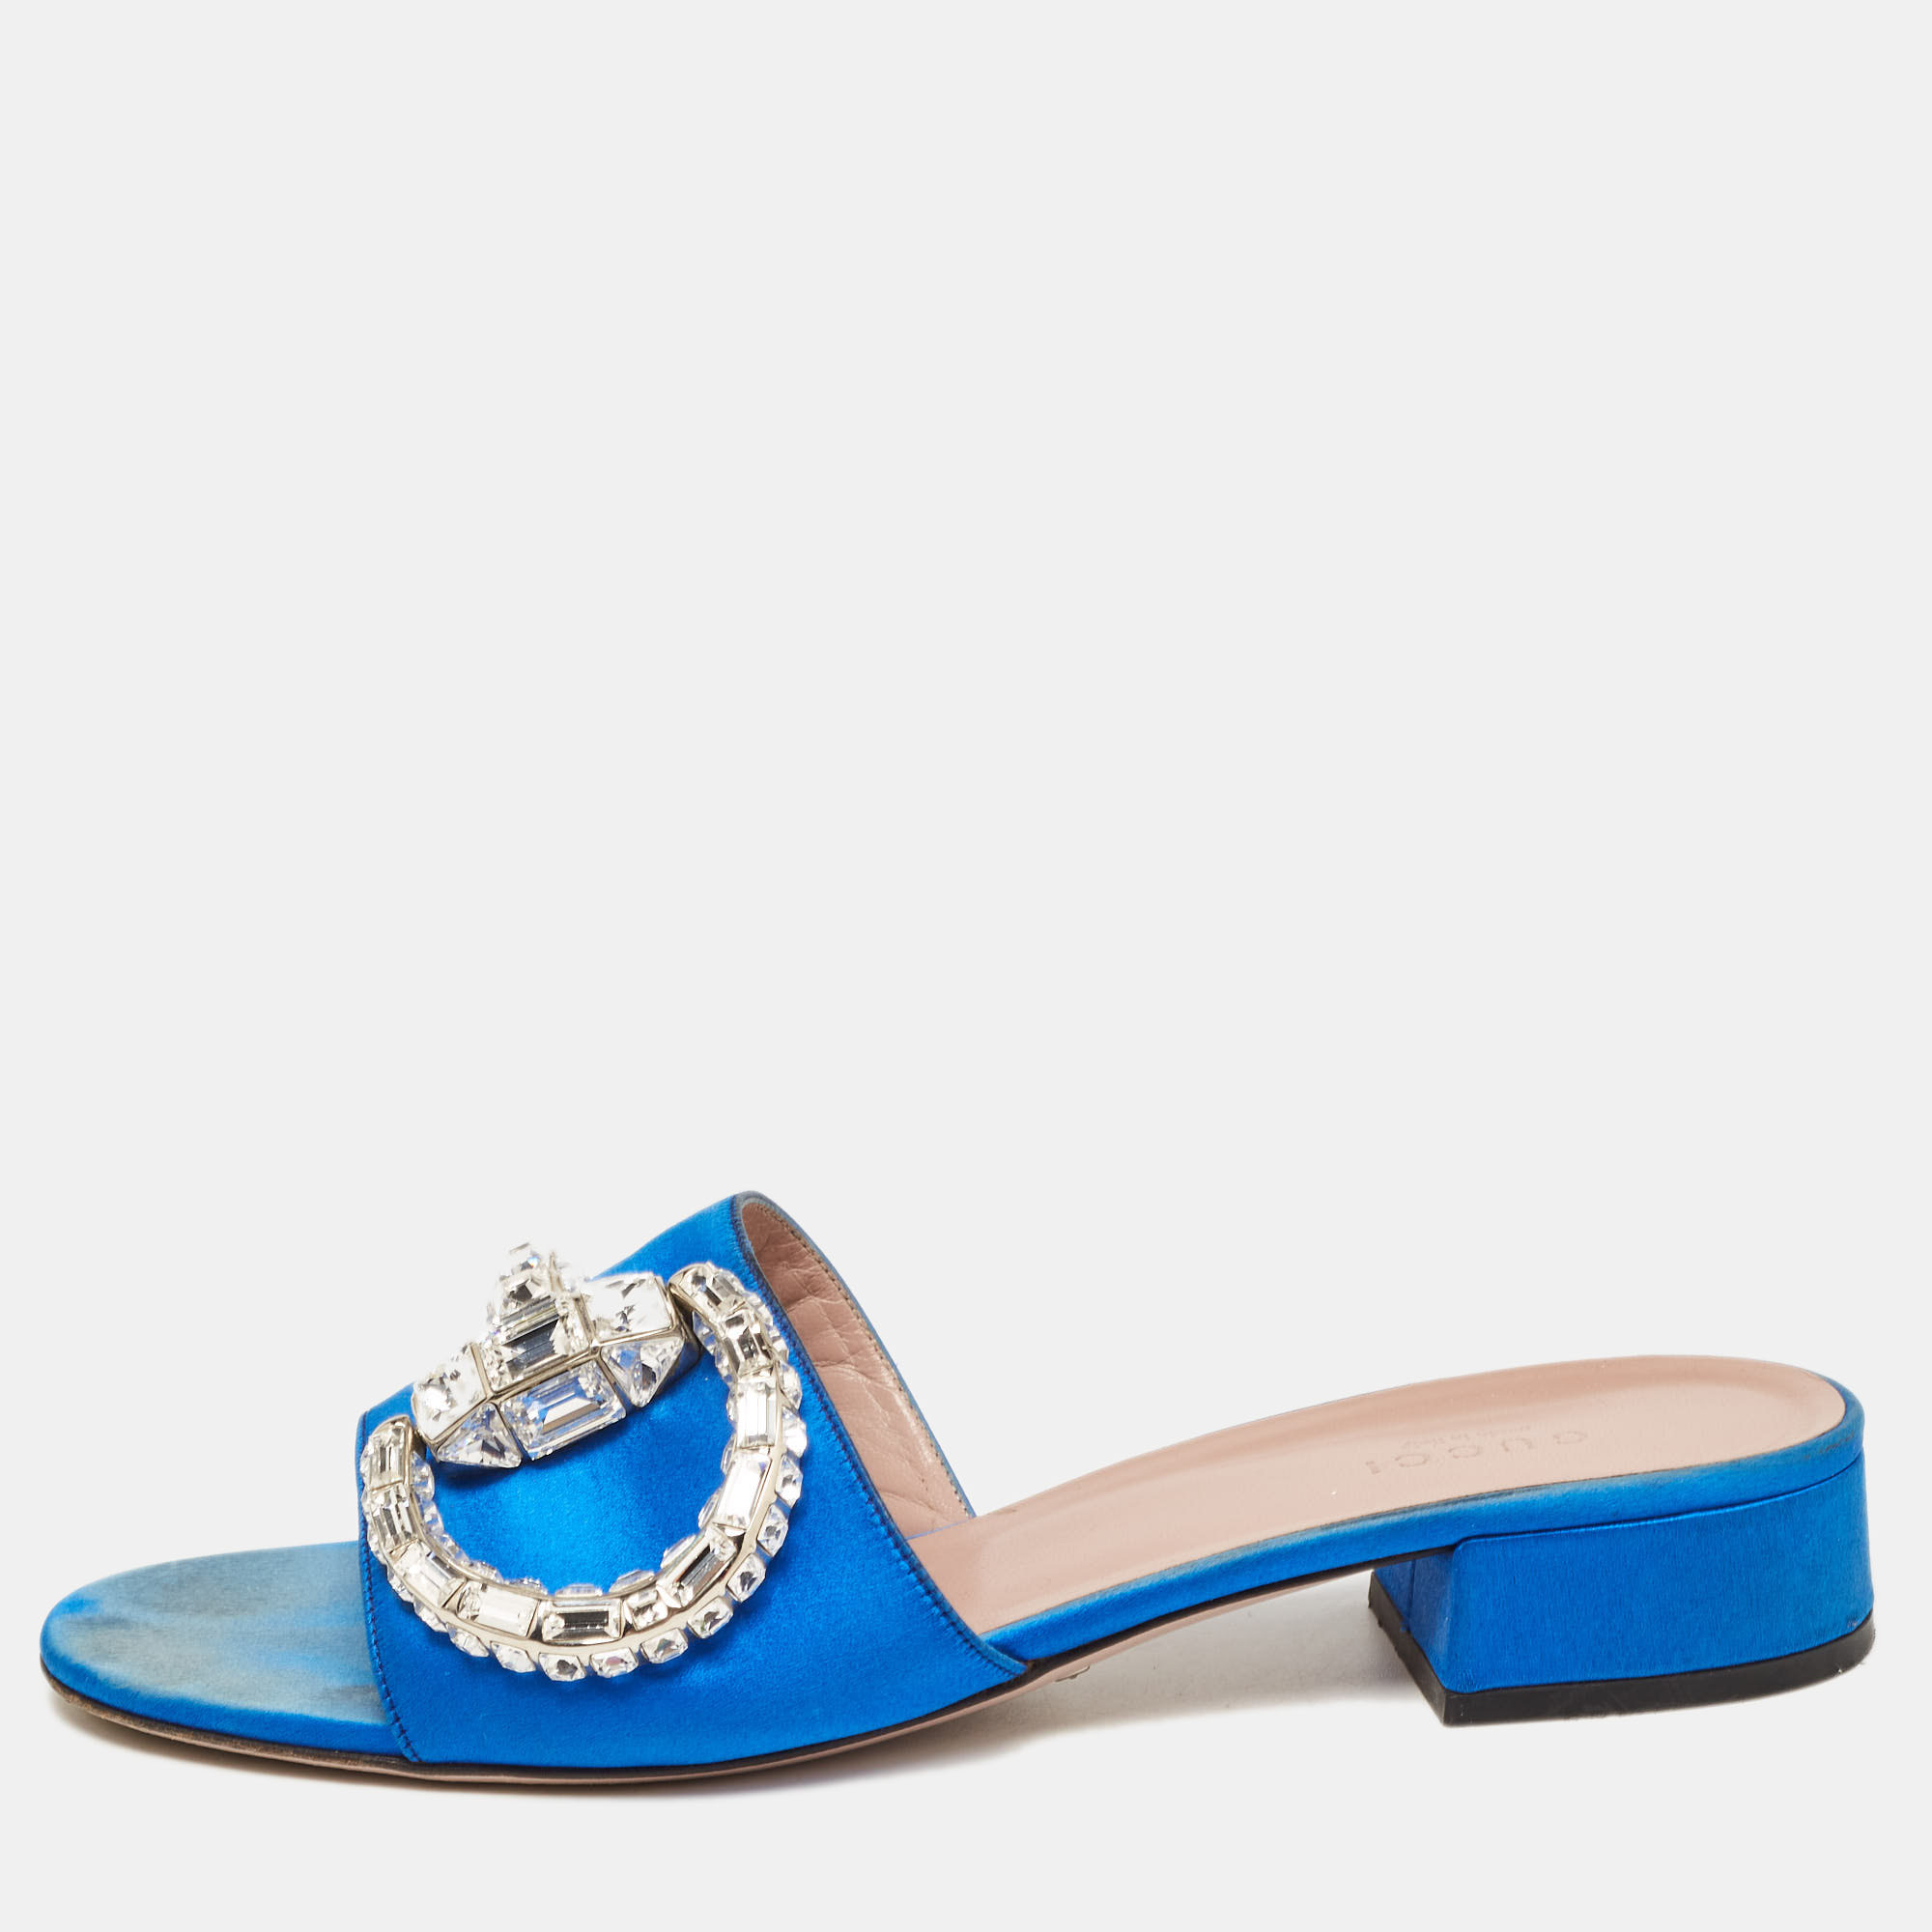 Gucci blue satin crystal horsebit maxime slide sandals size 38.5